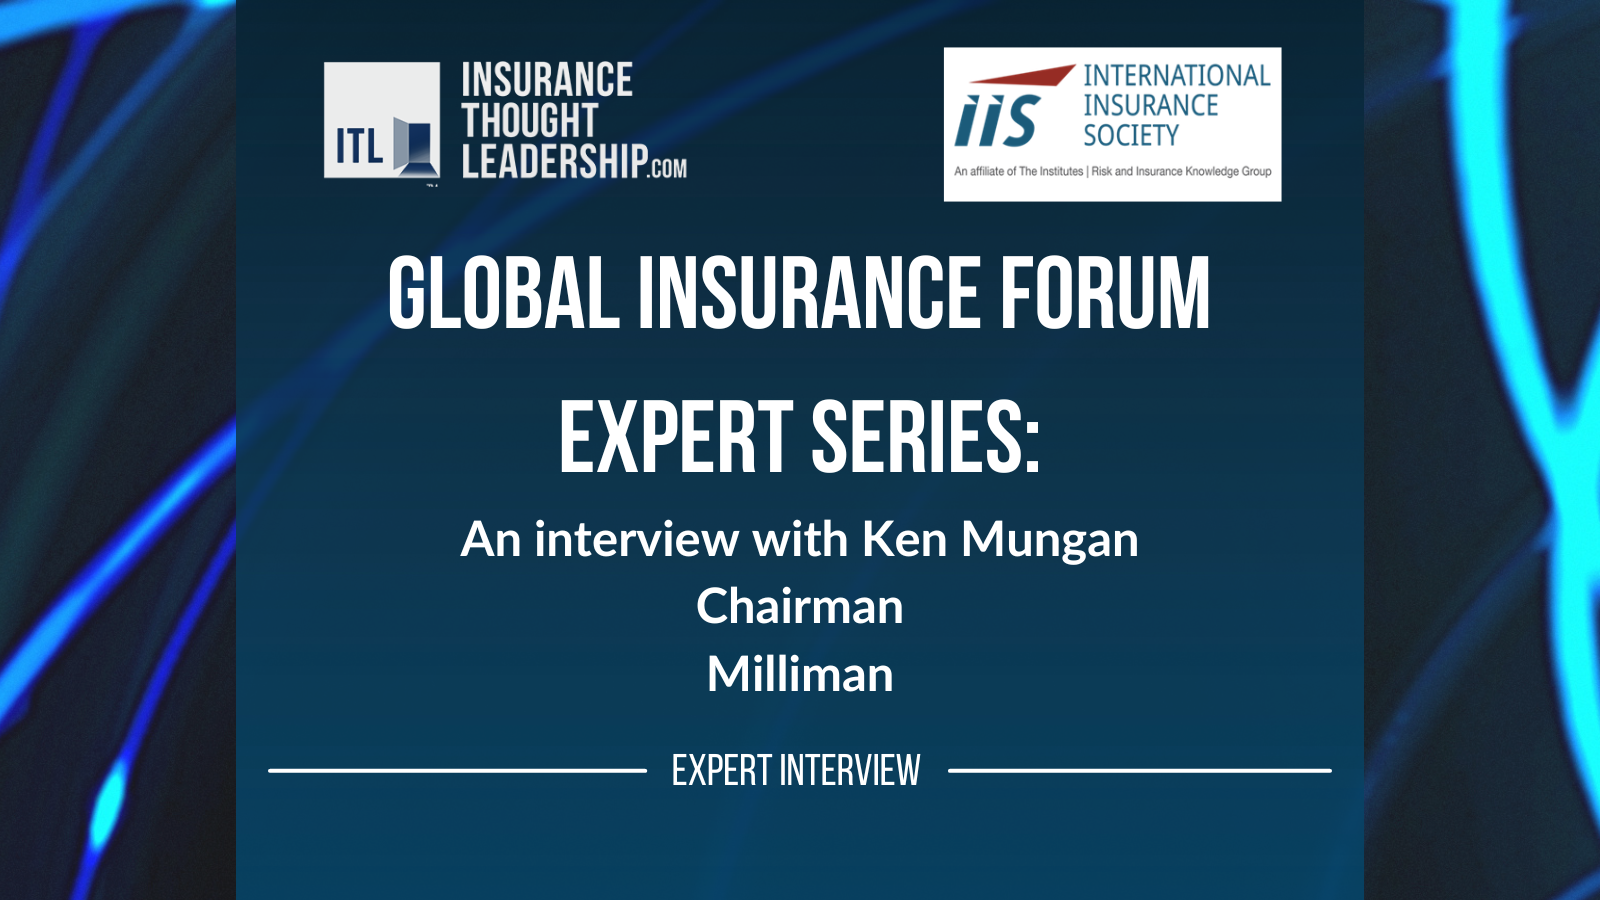 Global Insurance Forum Experts Series: An Interview with Ken Mungan